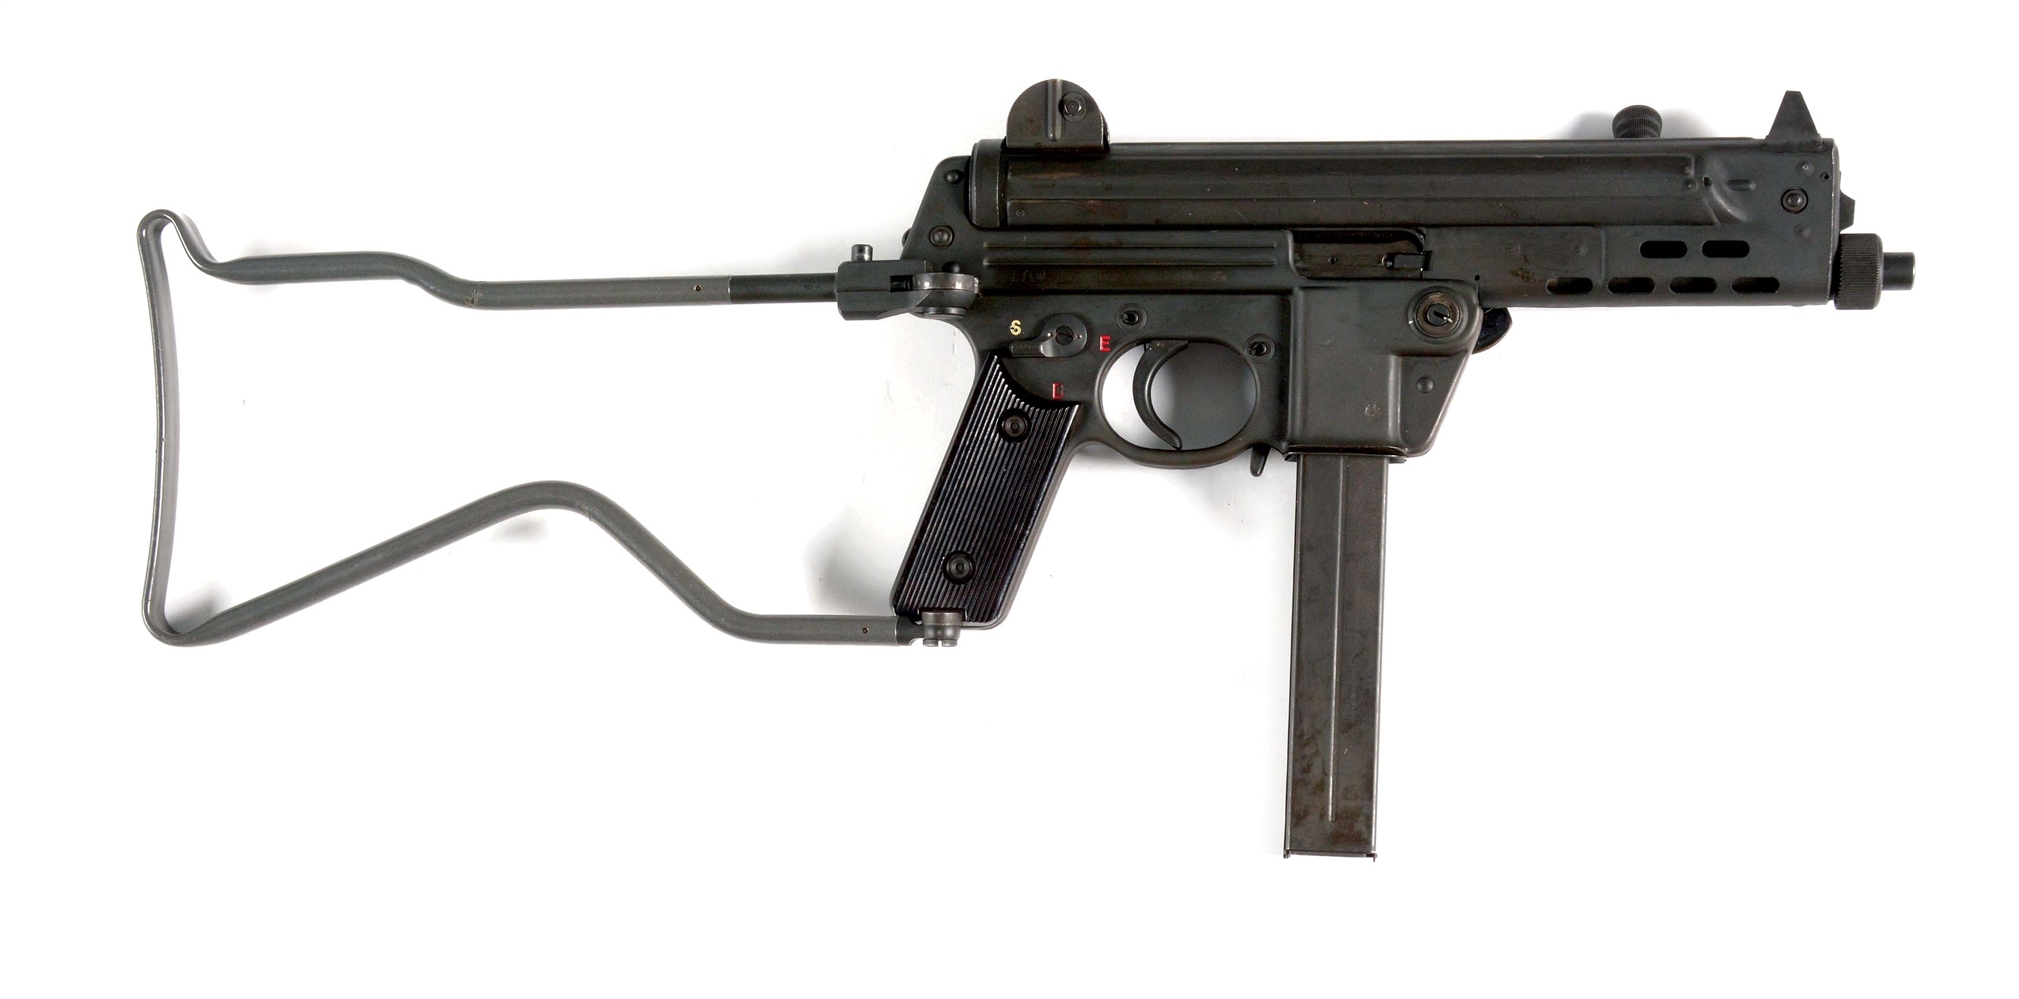 (N) MATCHING ORIGINAL WALTHER MP-K MACHINE GUN (PRE-86 DEALER SAMPLE).